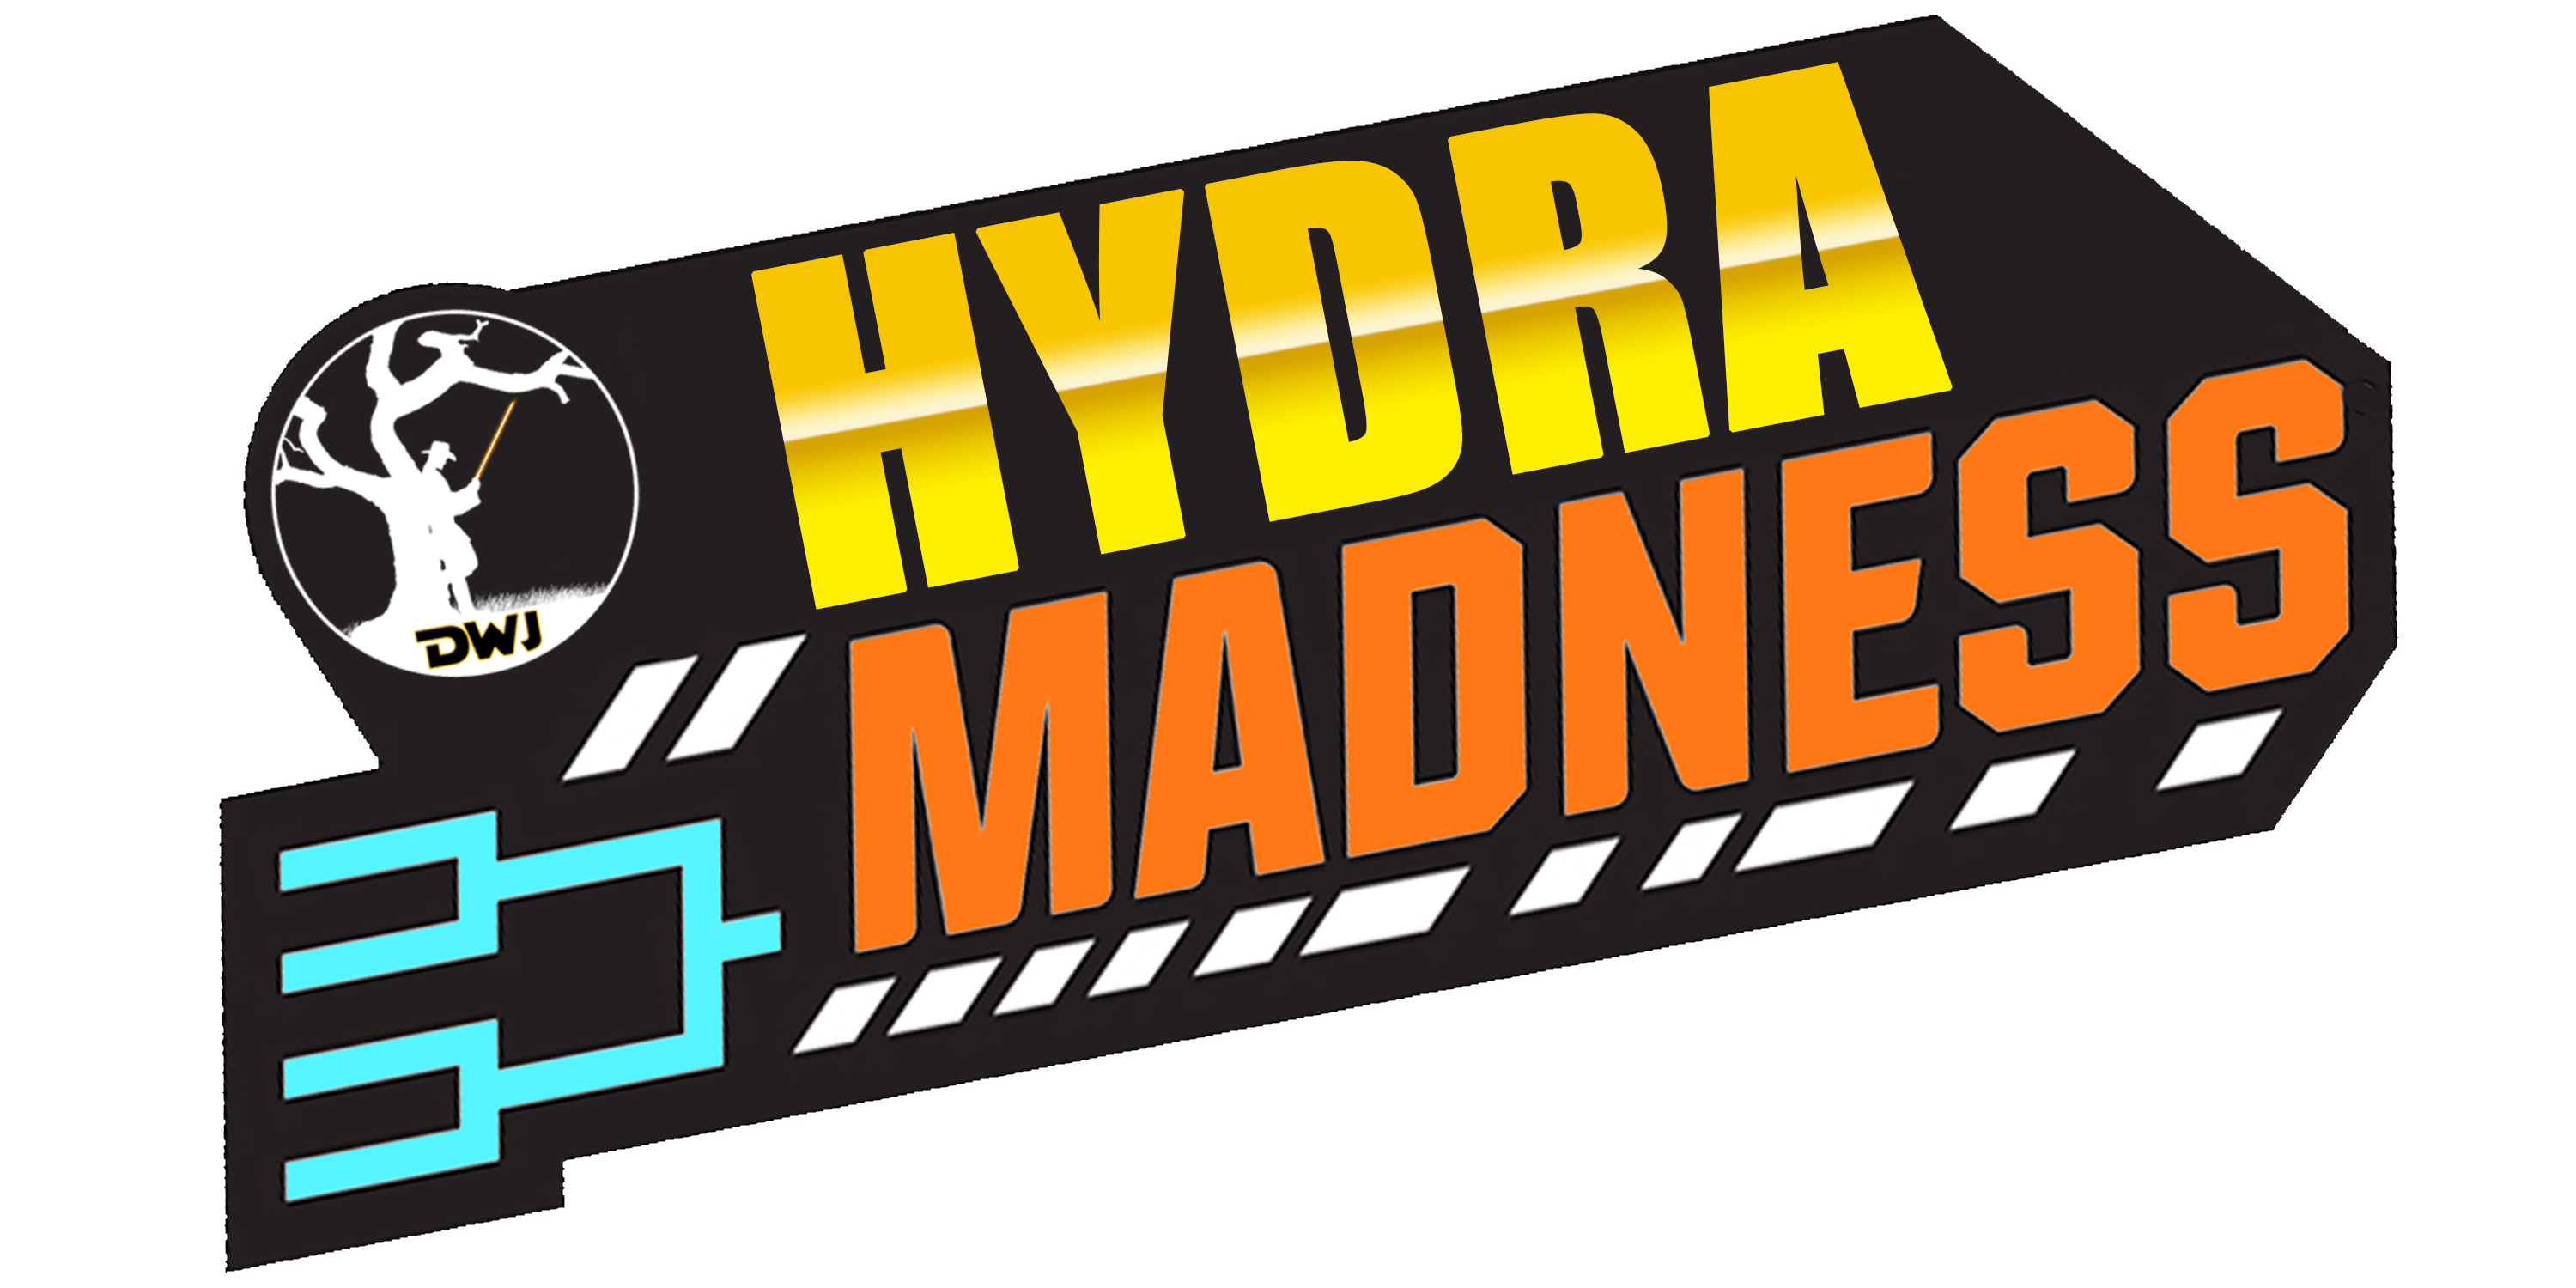 hydra creator clash logo